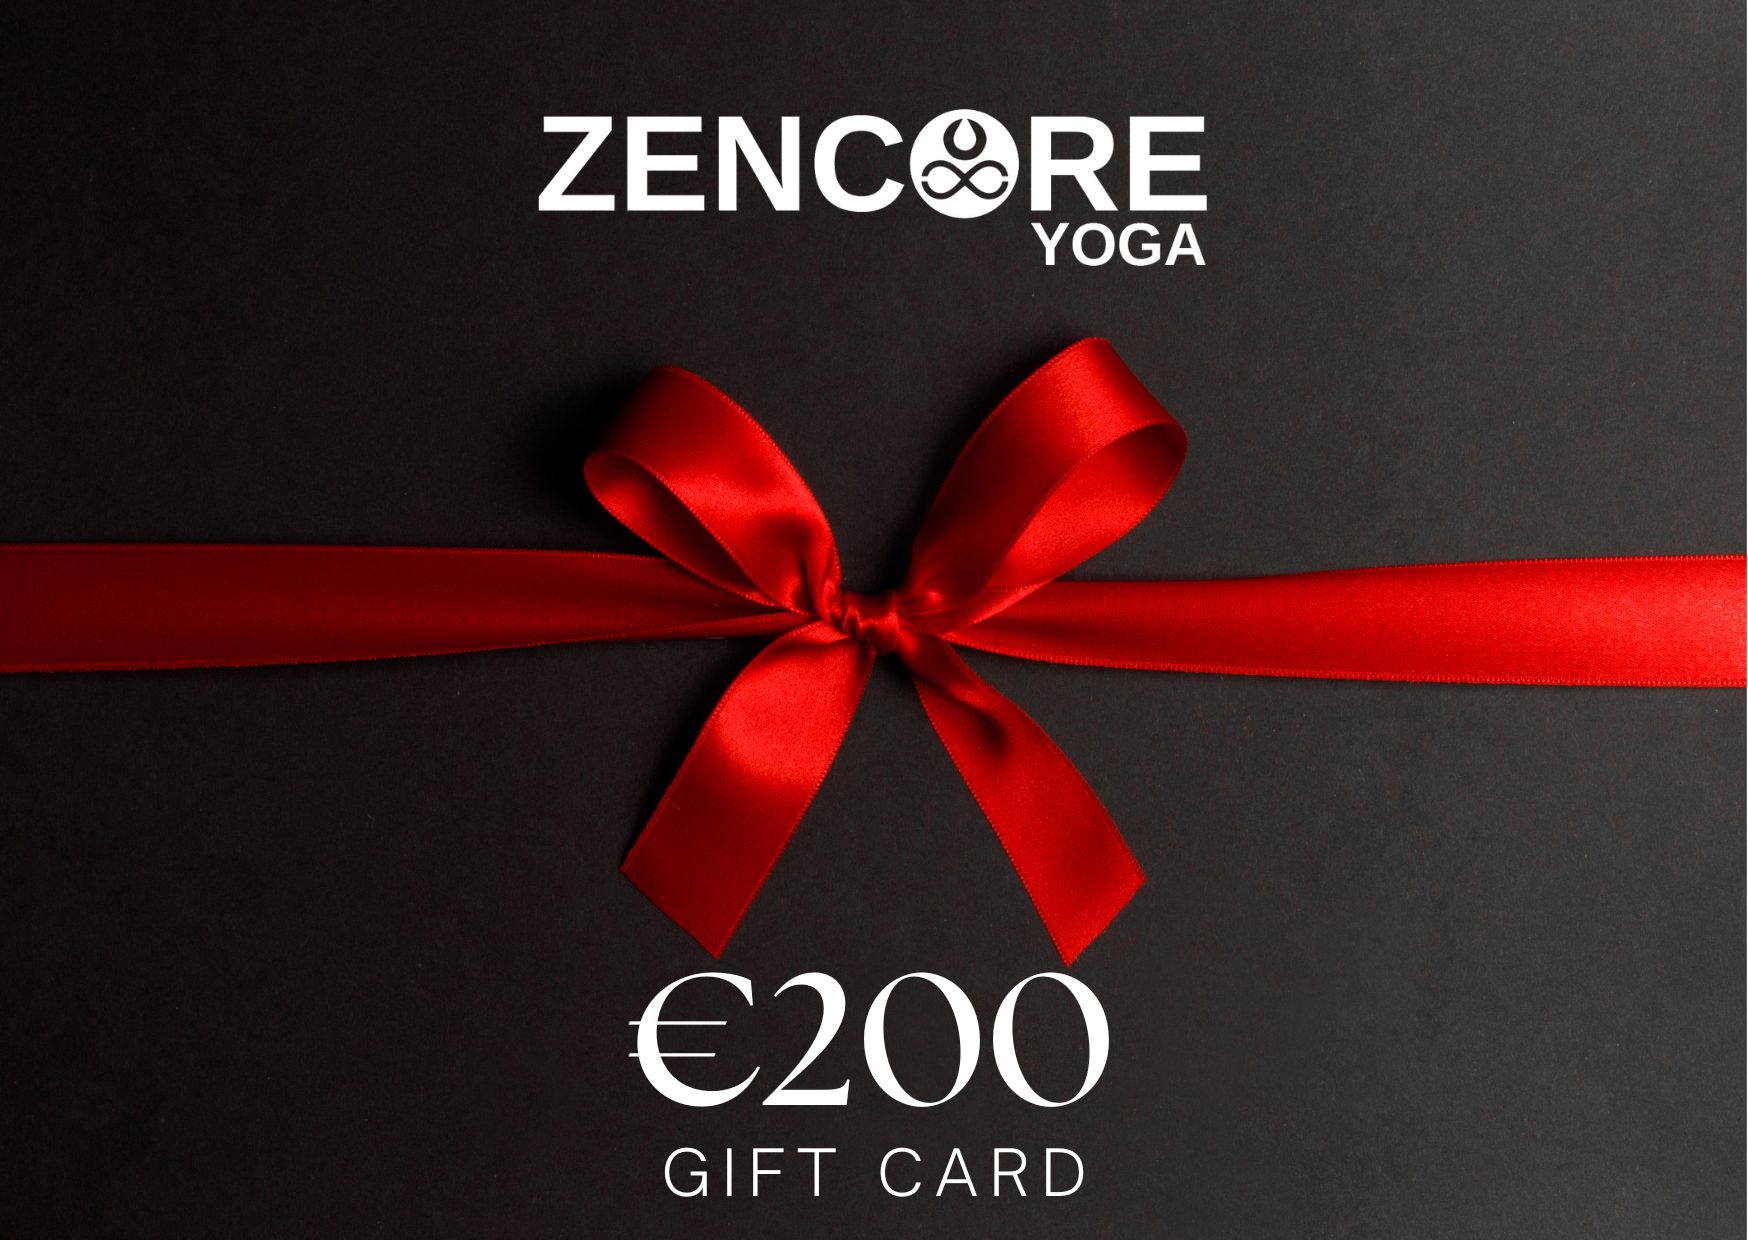 Zencore Yoga - €200 Gift Card